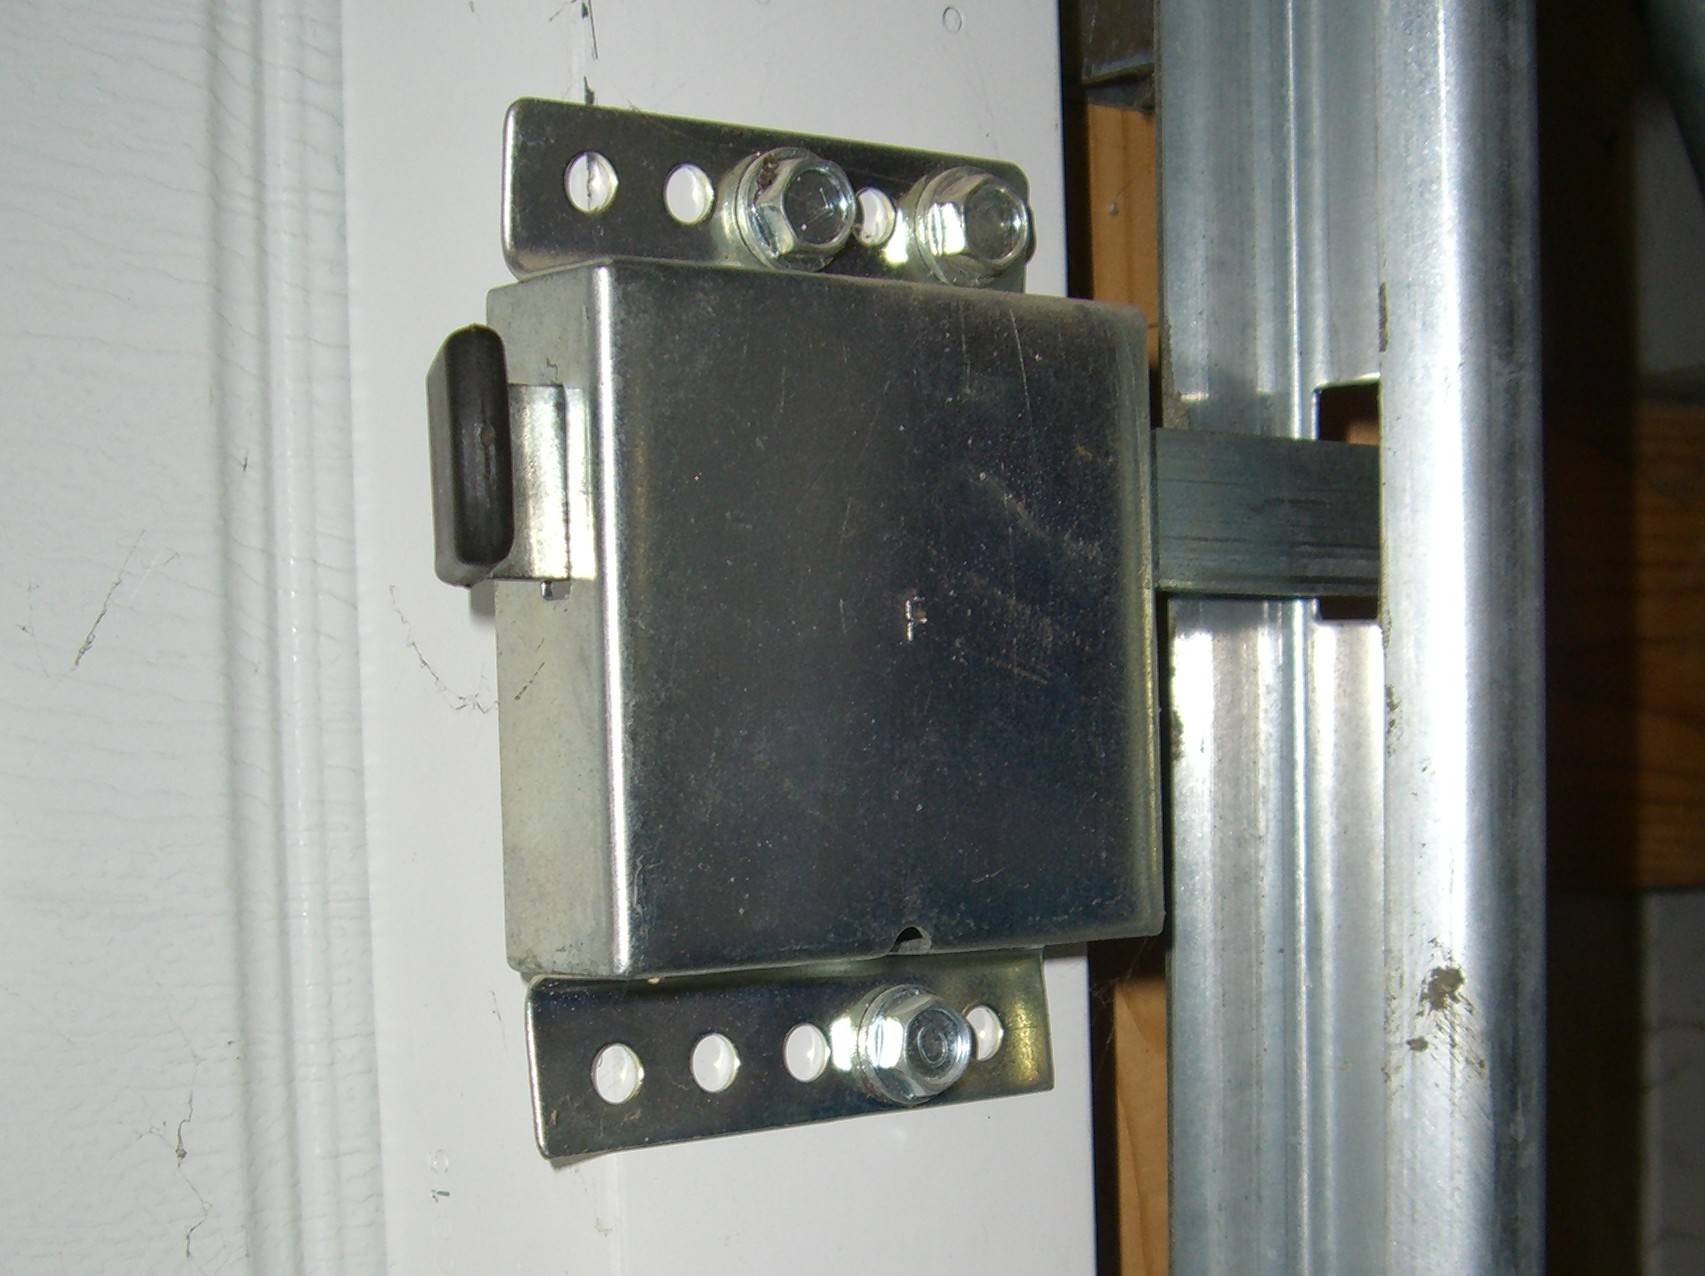 A more secure manual lock